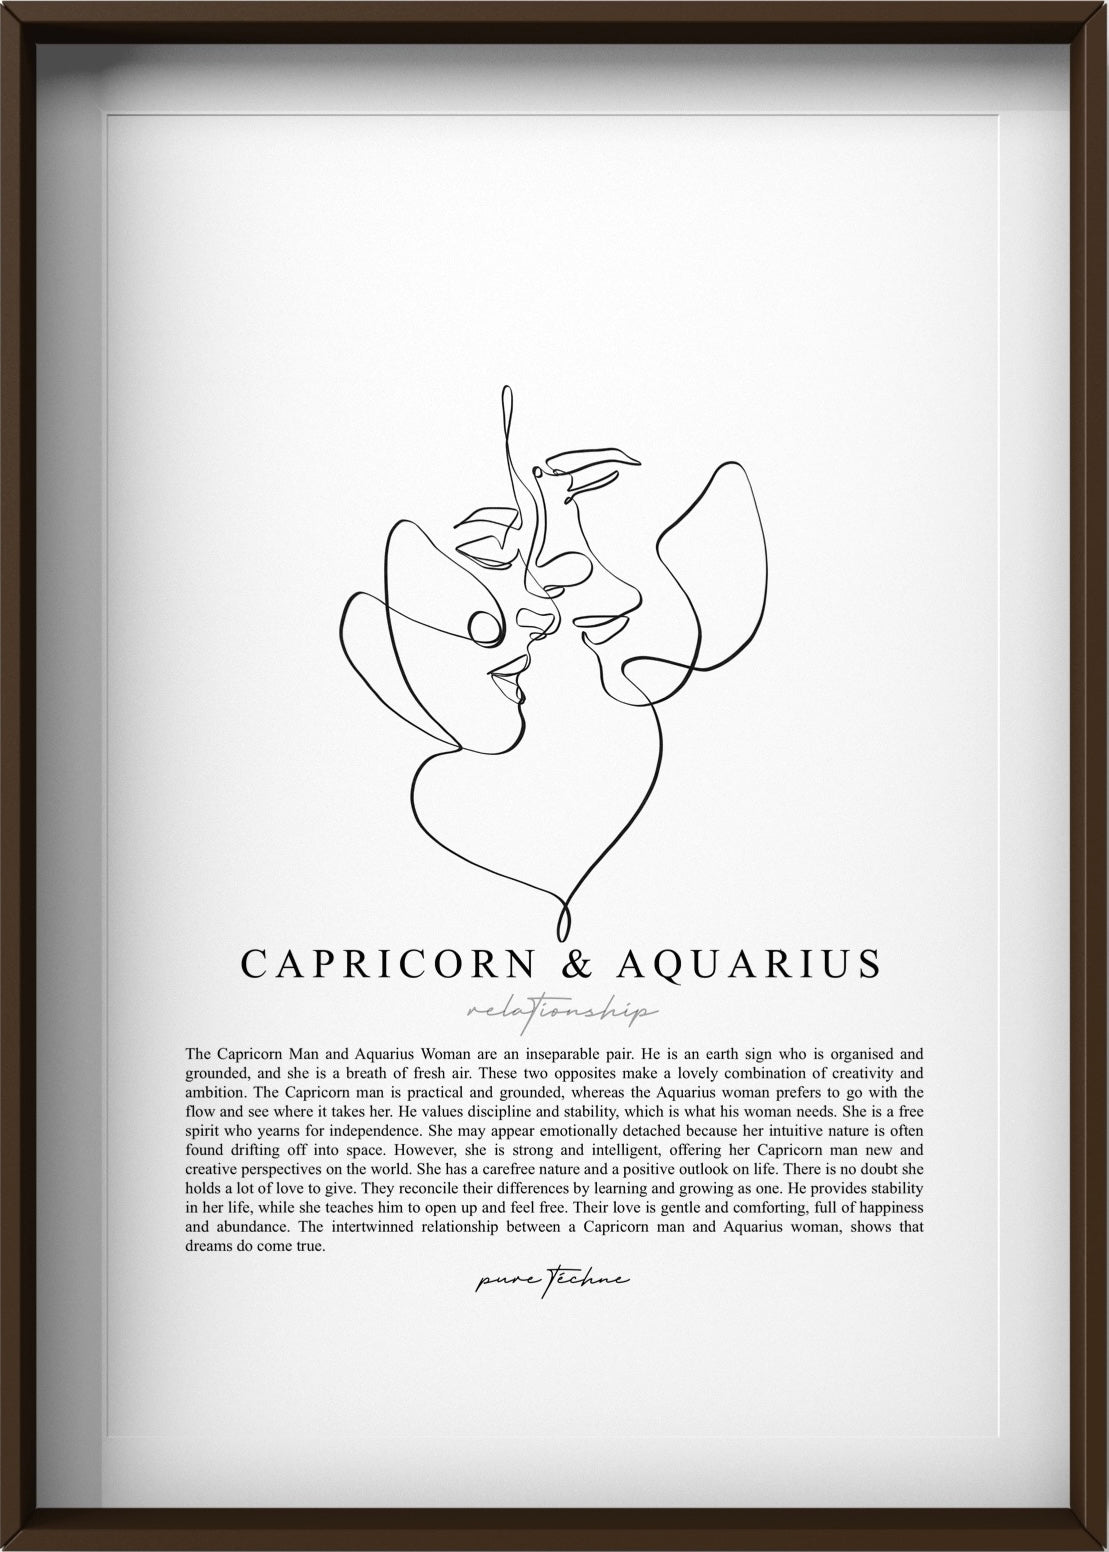 Capricorn Man & Aquarius Woman